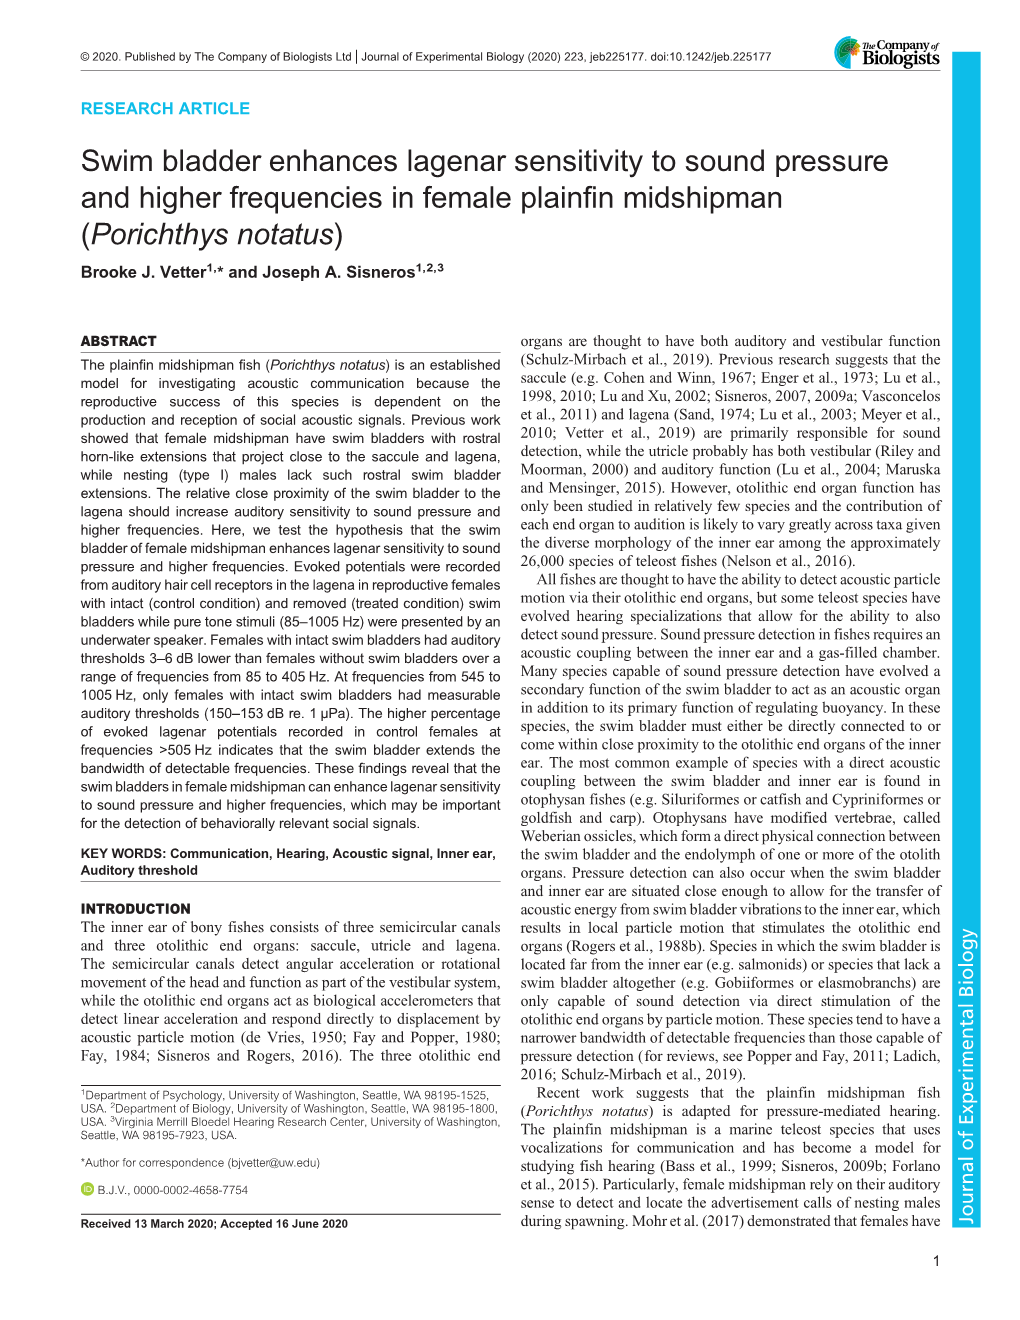 Swim Bladder Enhances Lagenar Sensitivity to Sound Pressure and Higher Frequencies in Female Plainfin Midshipman (Porichthys Notatus) Brooke J